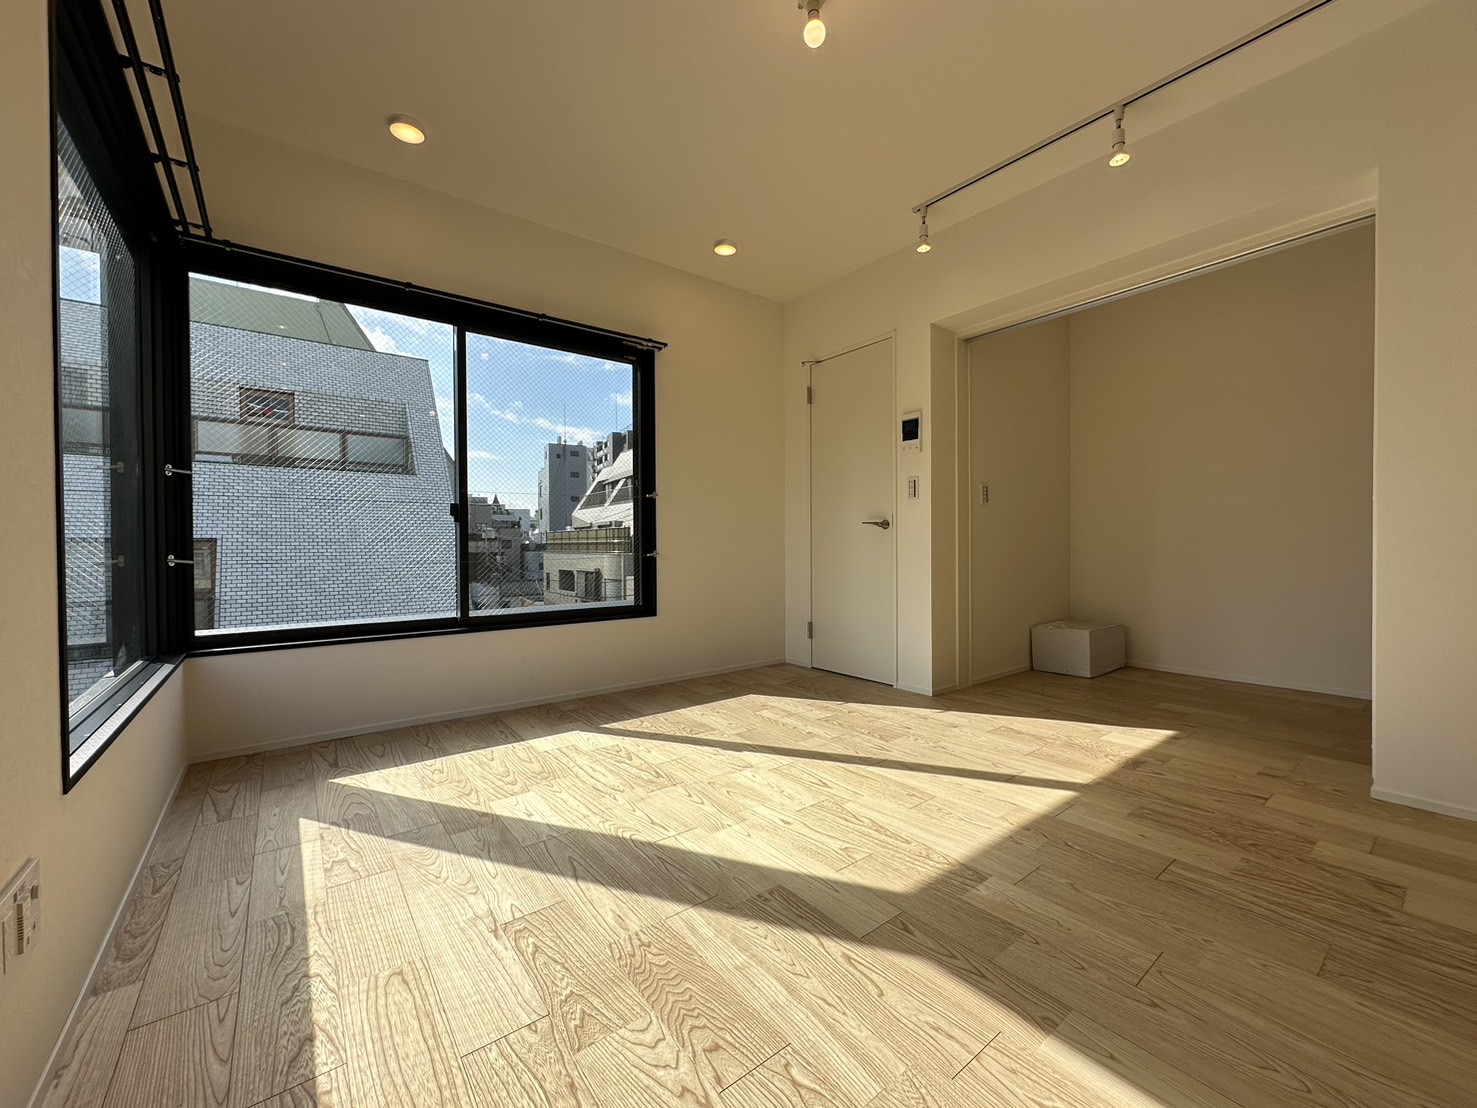 2LDK Apartment For Rent in Asakusa, Taito-ku, Tokyo - Real Estate Japan